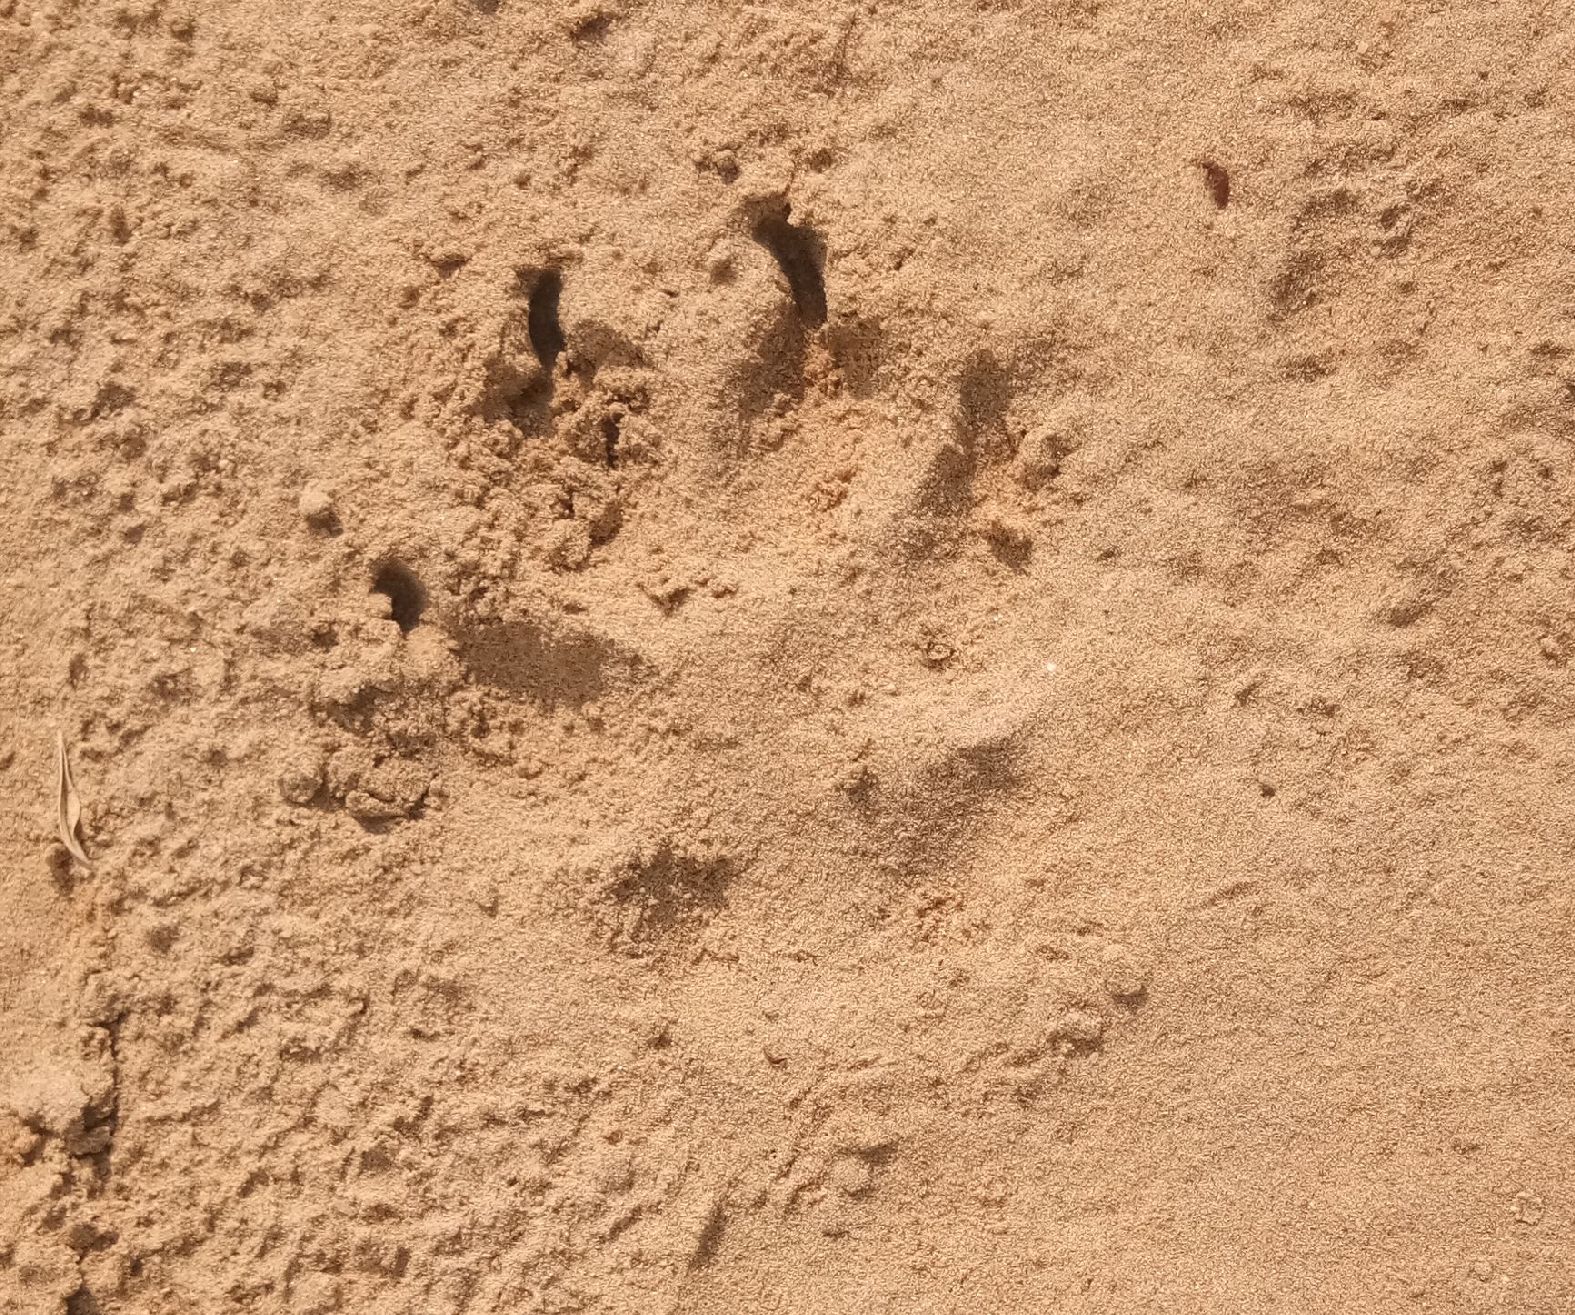 Footprints of wild animal seen again in nokh area of jaisalmer